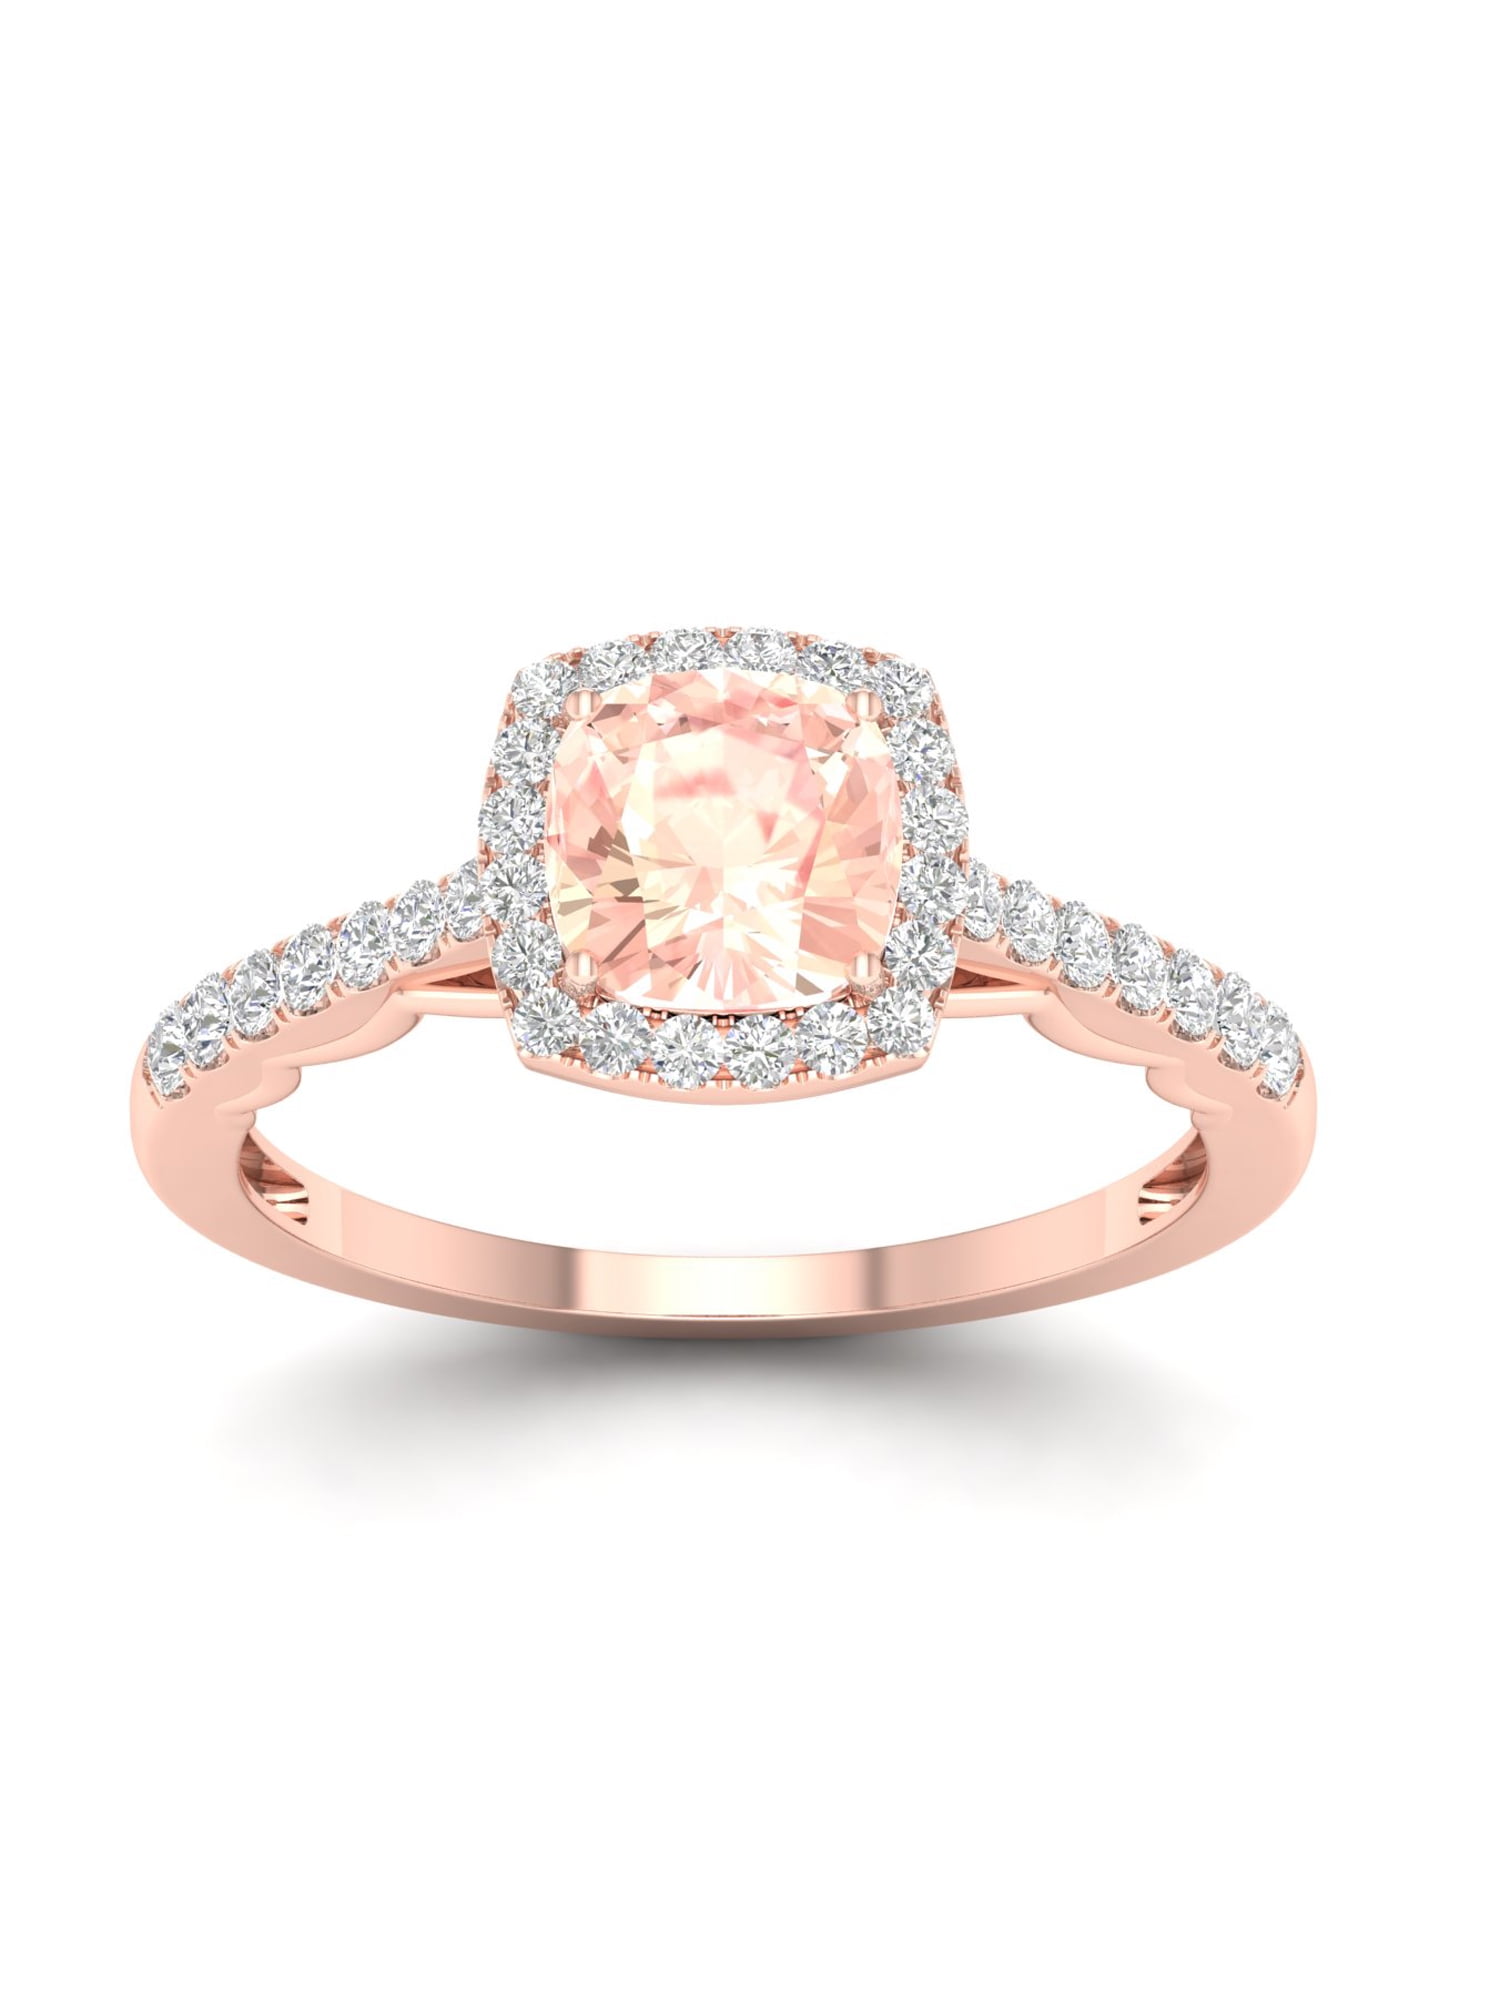 Womens Diamond Accent Genuine Pink Morganite 10K Rose Gold Heart